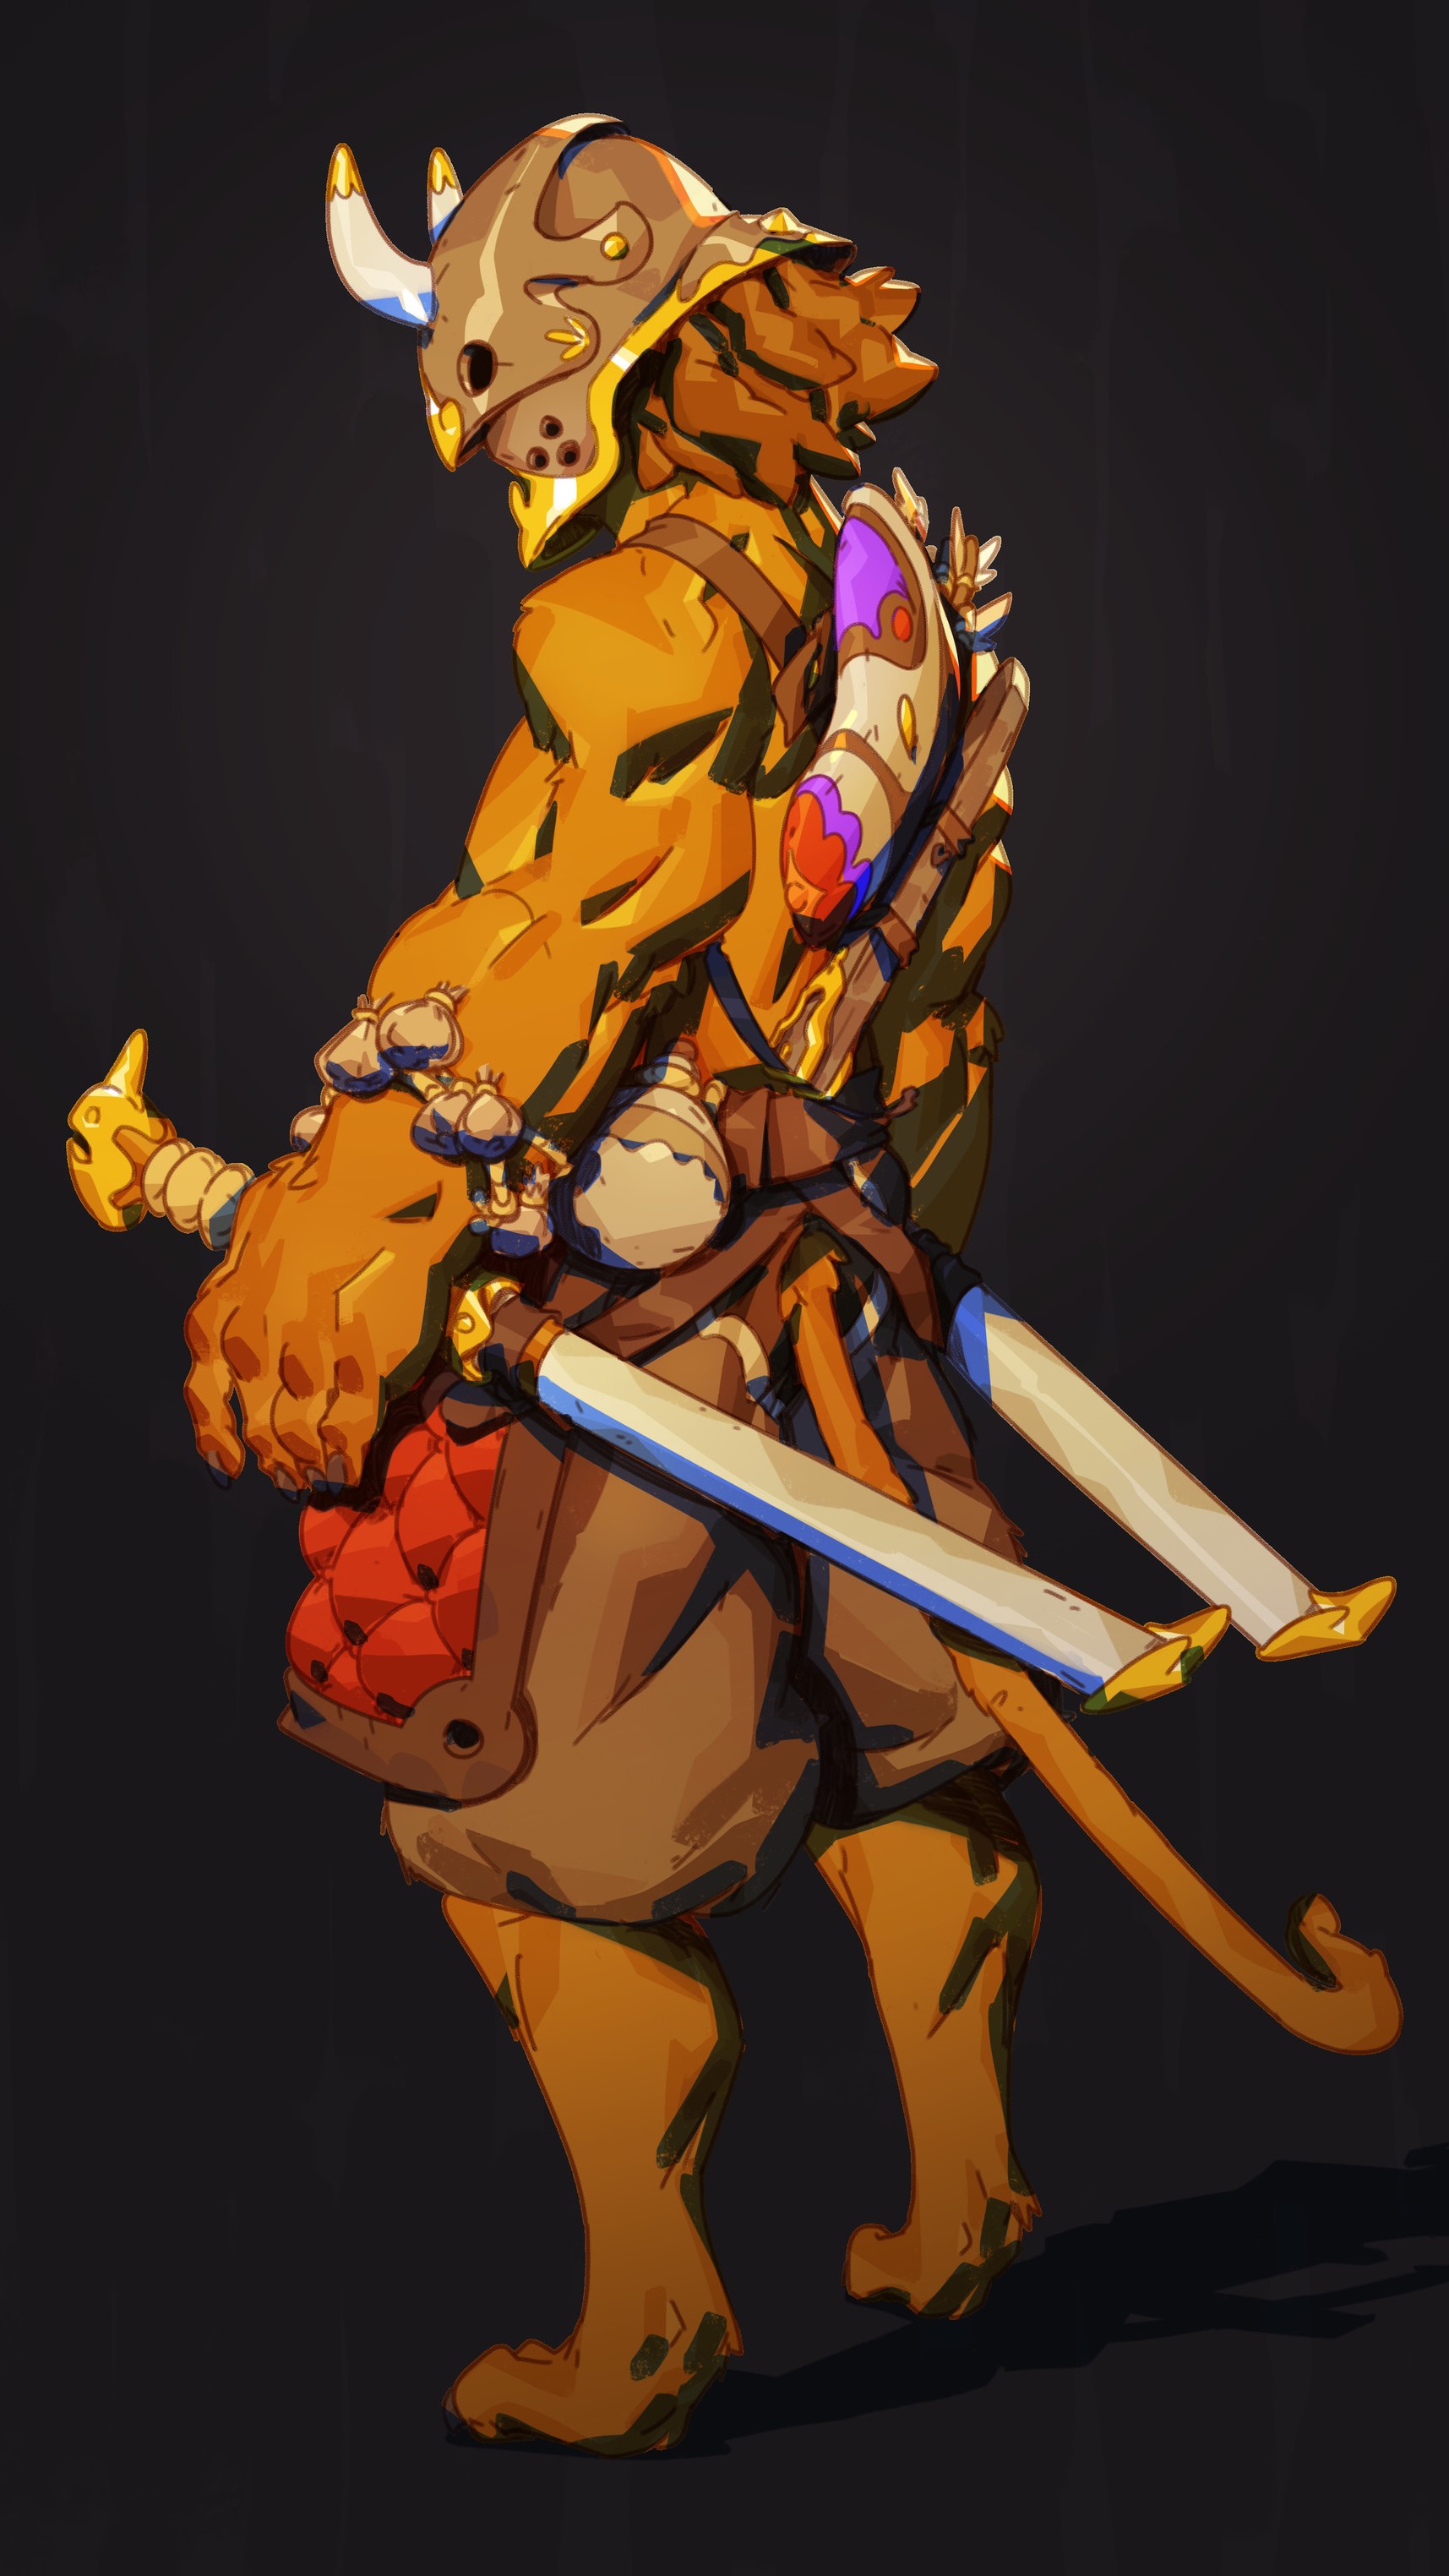 Fantasy creature warrior illustration for phone wallpaper.